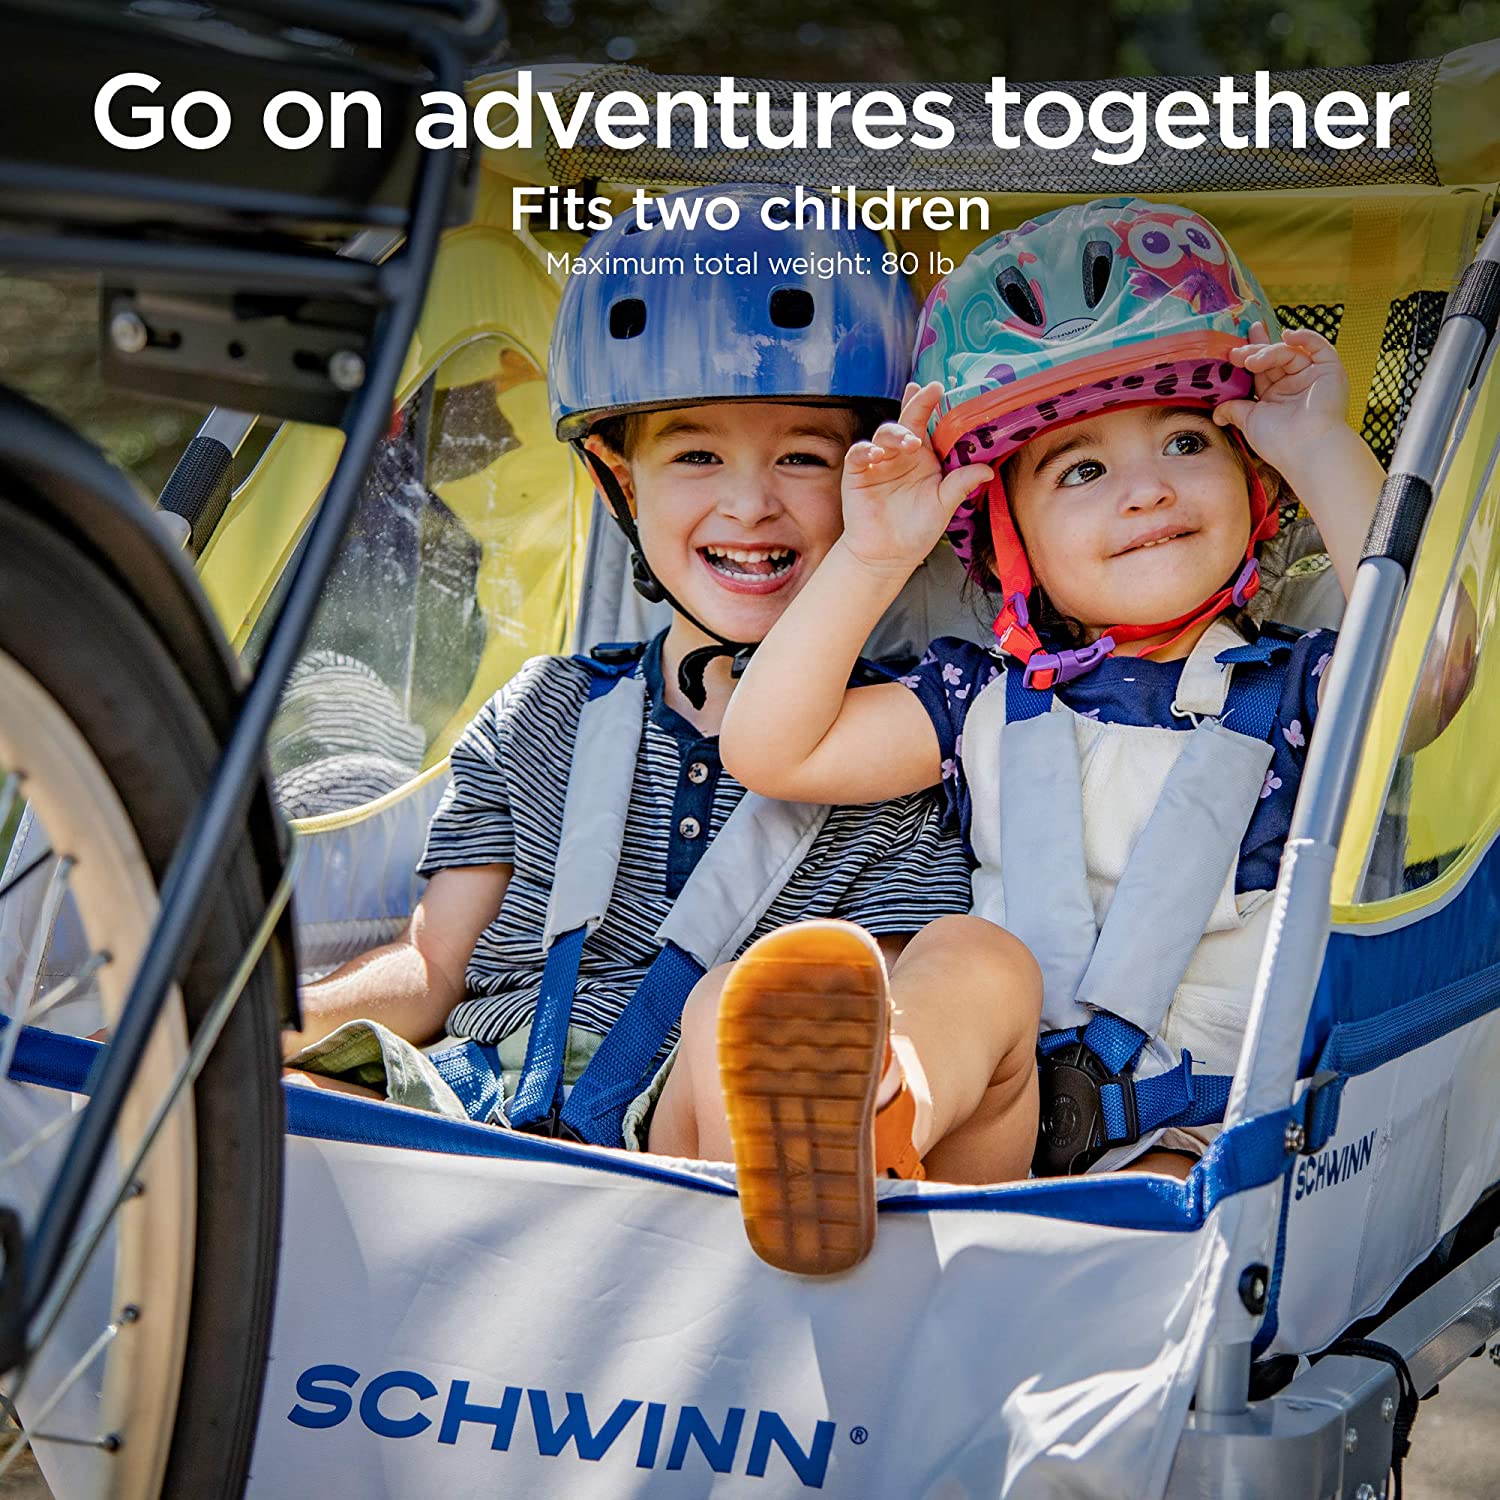 Schwinn Echo, and Trailblazer Child Bike Trailer, Single and Double Baby Carrier, Canopy, inch Wheels Echo - 2 Seat Bike Trailer Yellow - image 2 of 7